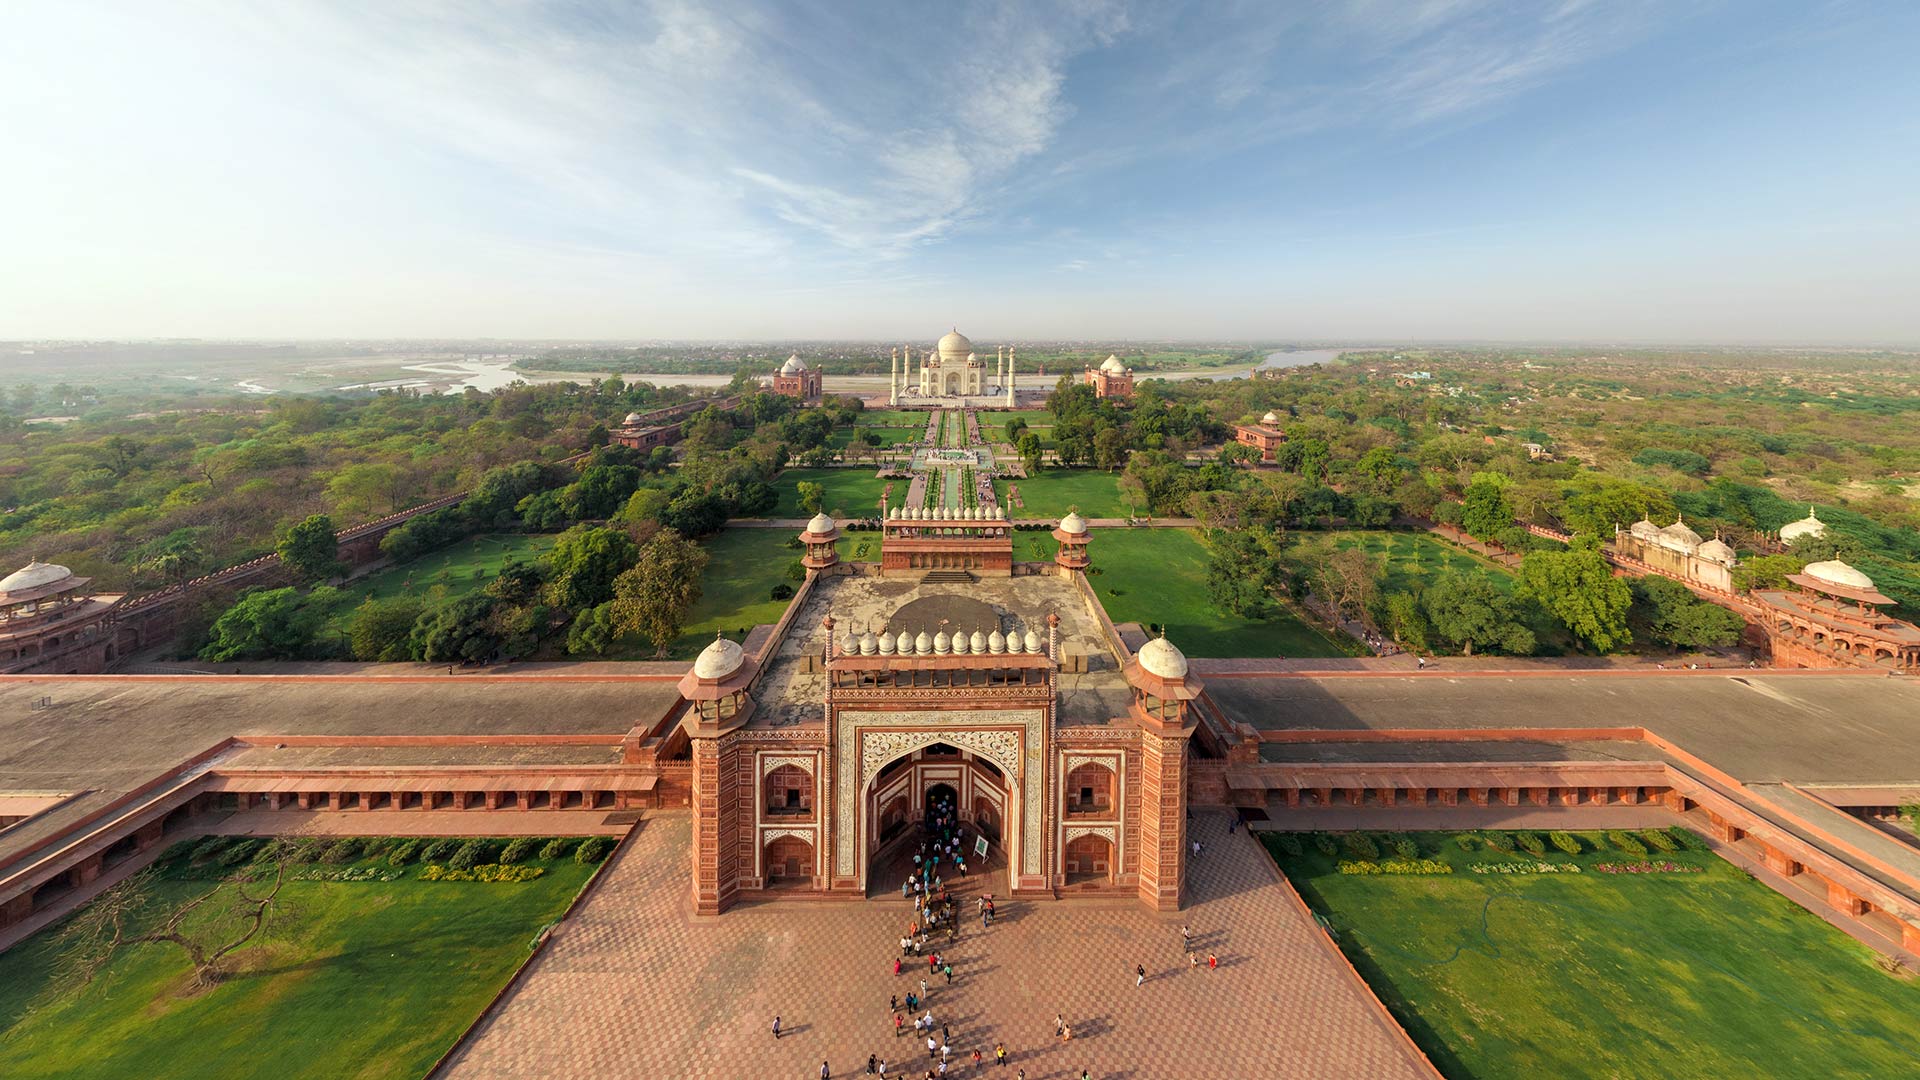 Taj Mahal Architecture India Landmark World Heritage Site Aerial View 1920x1080